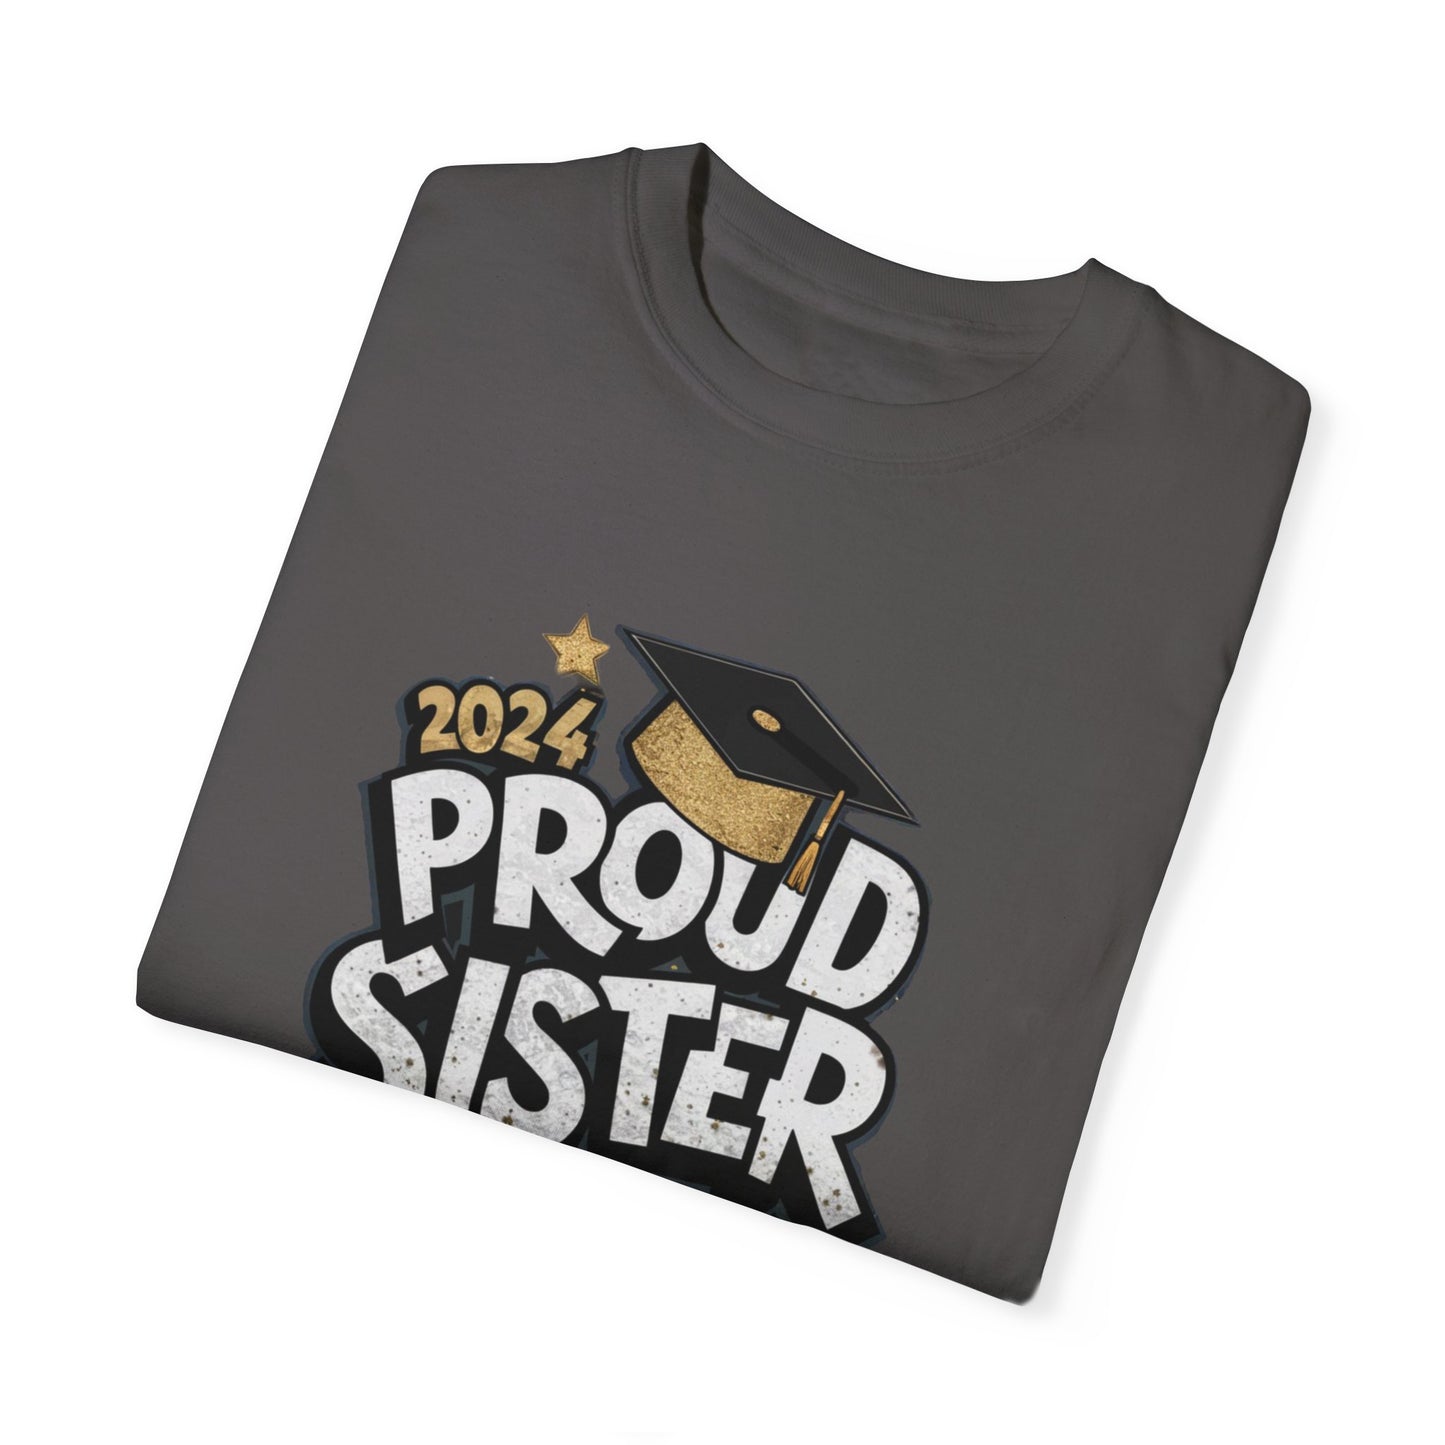 Proud Sister of a 2024 Graduate Unisex Garment-dyed T-shirt Cotton Funny Humorous Graphic Soft Premium Unisex Men Women Graphite T-shirt Birthday Gift-38